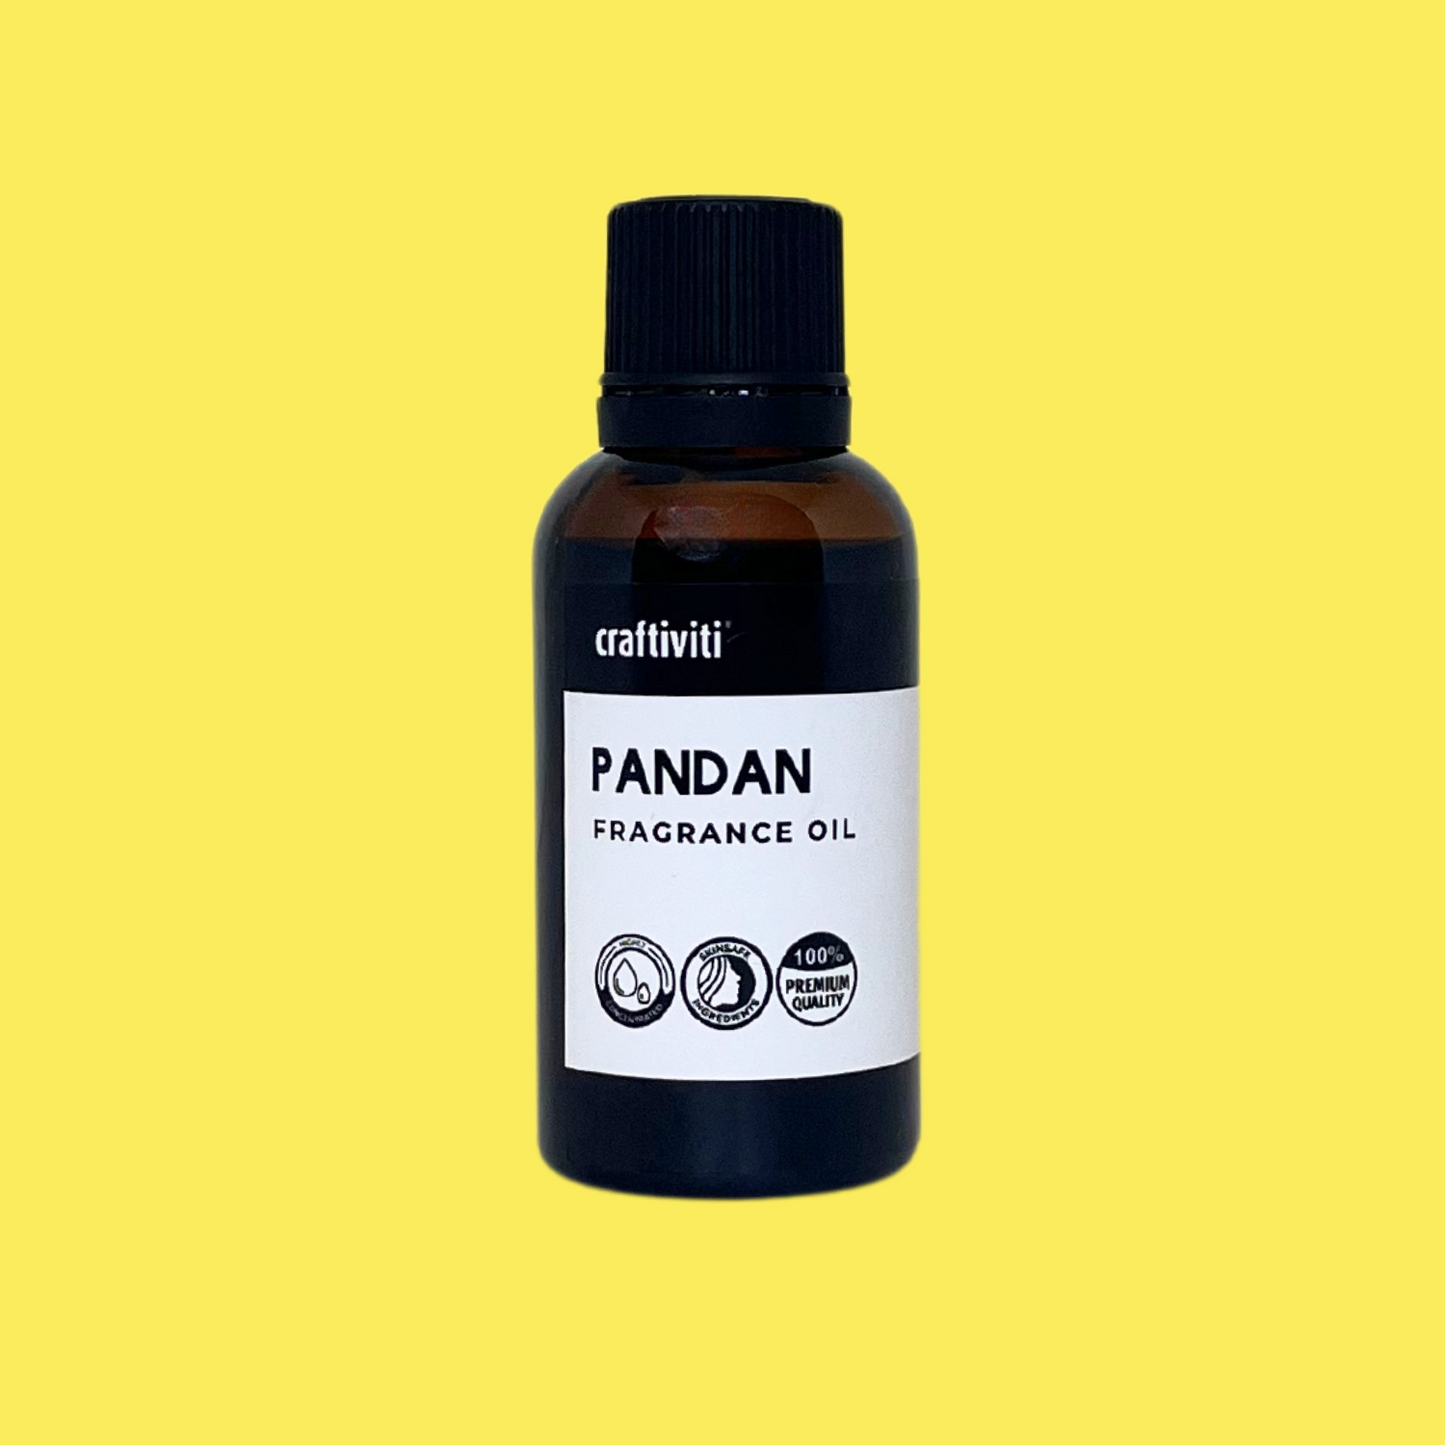 Pandan Fragrance Oil